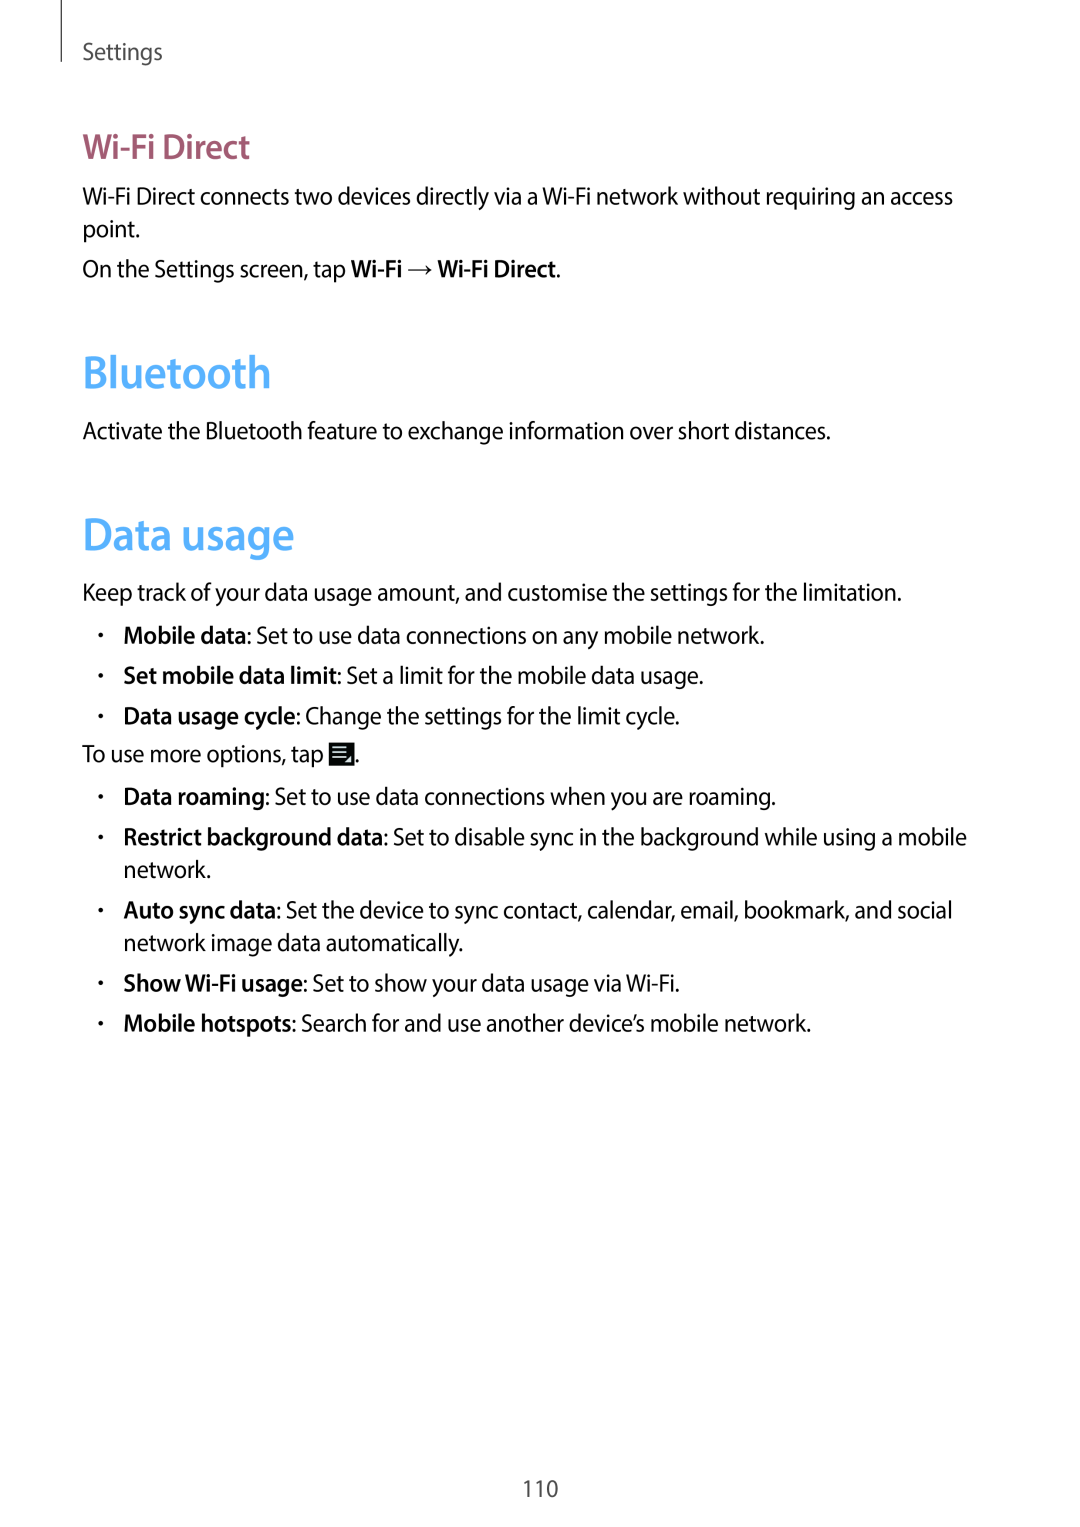 Samsung EK-GC100 user manual Data usage, Wi-Fi Direct, Settings, Bluetooth 